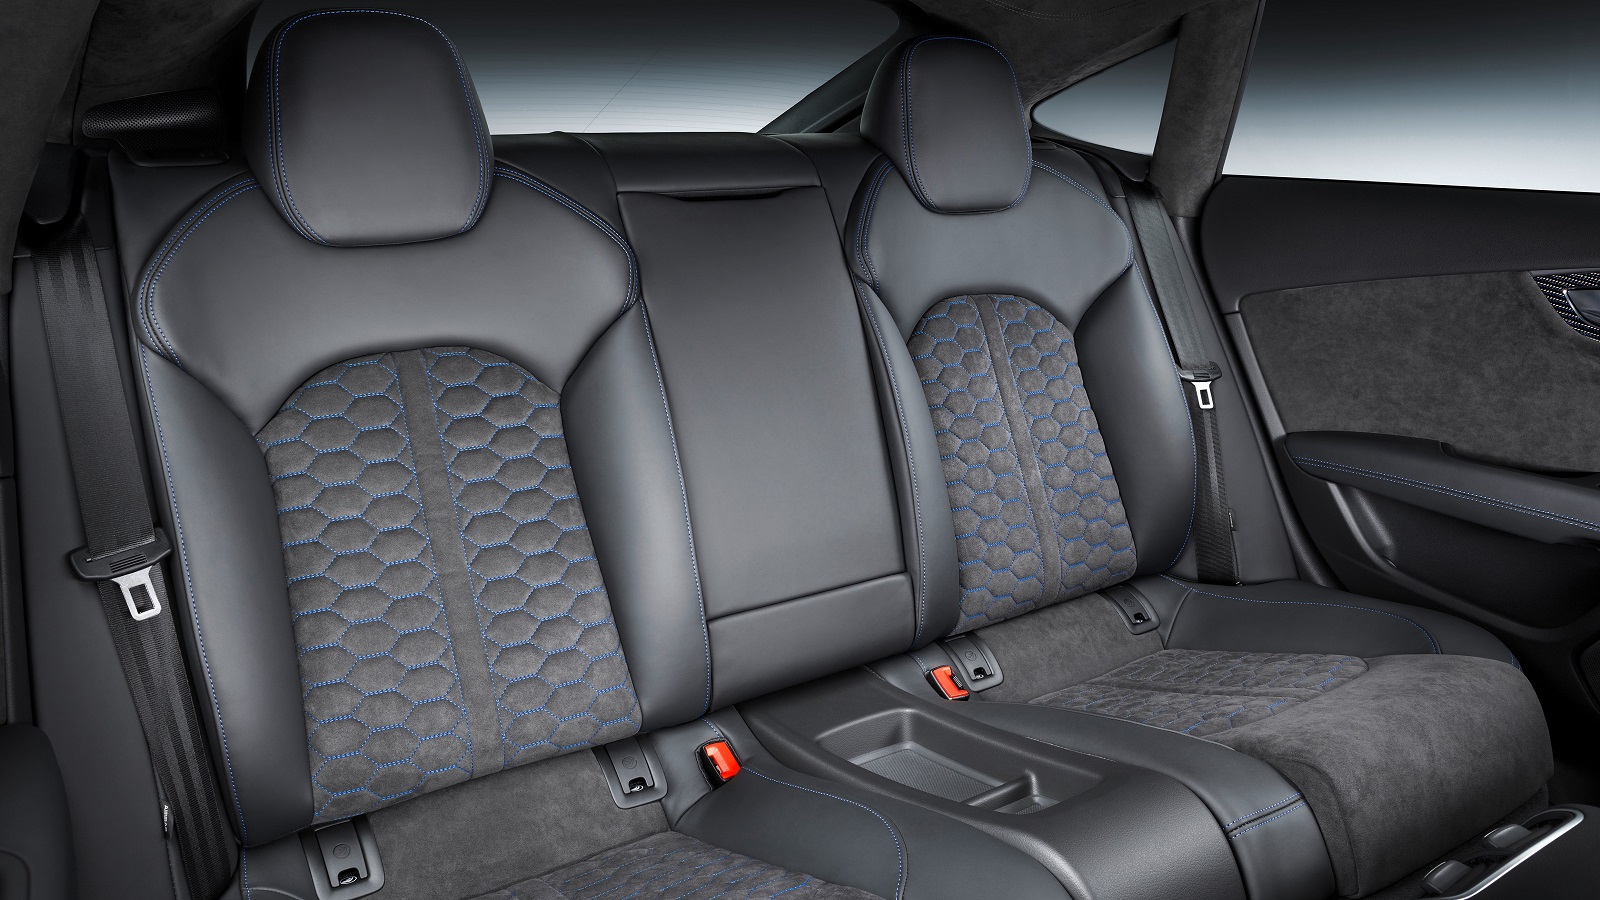 News 2016 Audi Rs7 Performance Interior 1 6speedonline